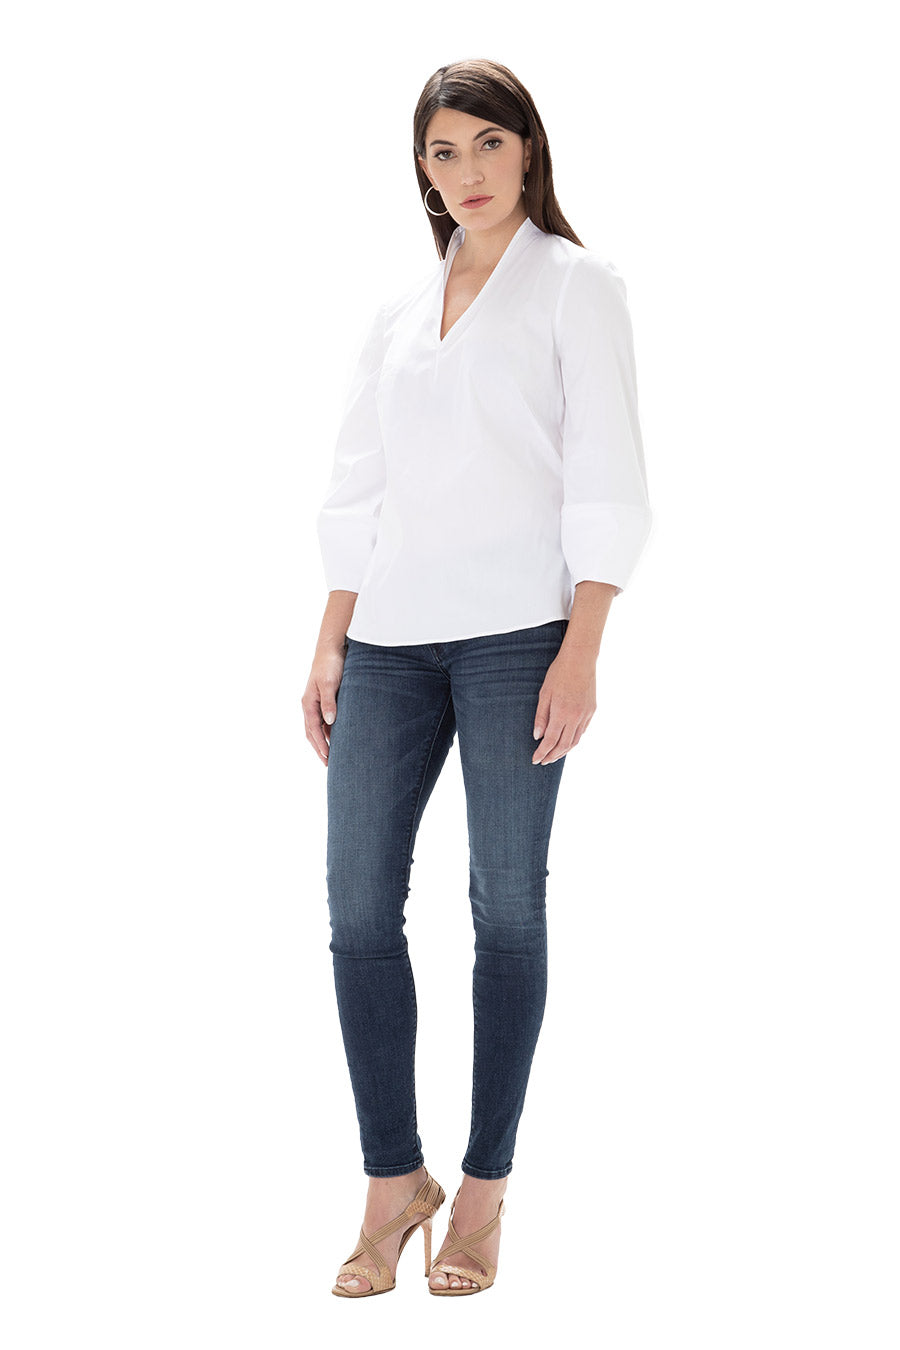 White cotton vneck long sleeve lattern sleeve blouse